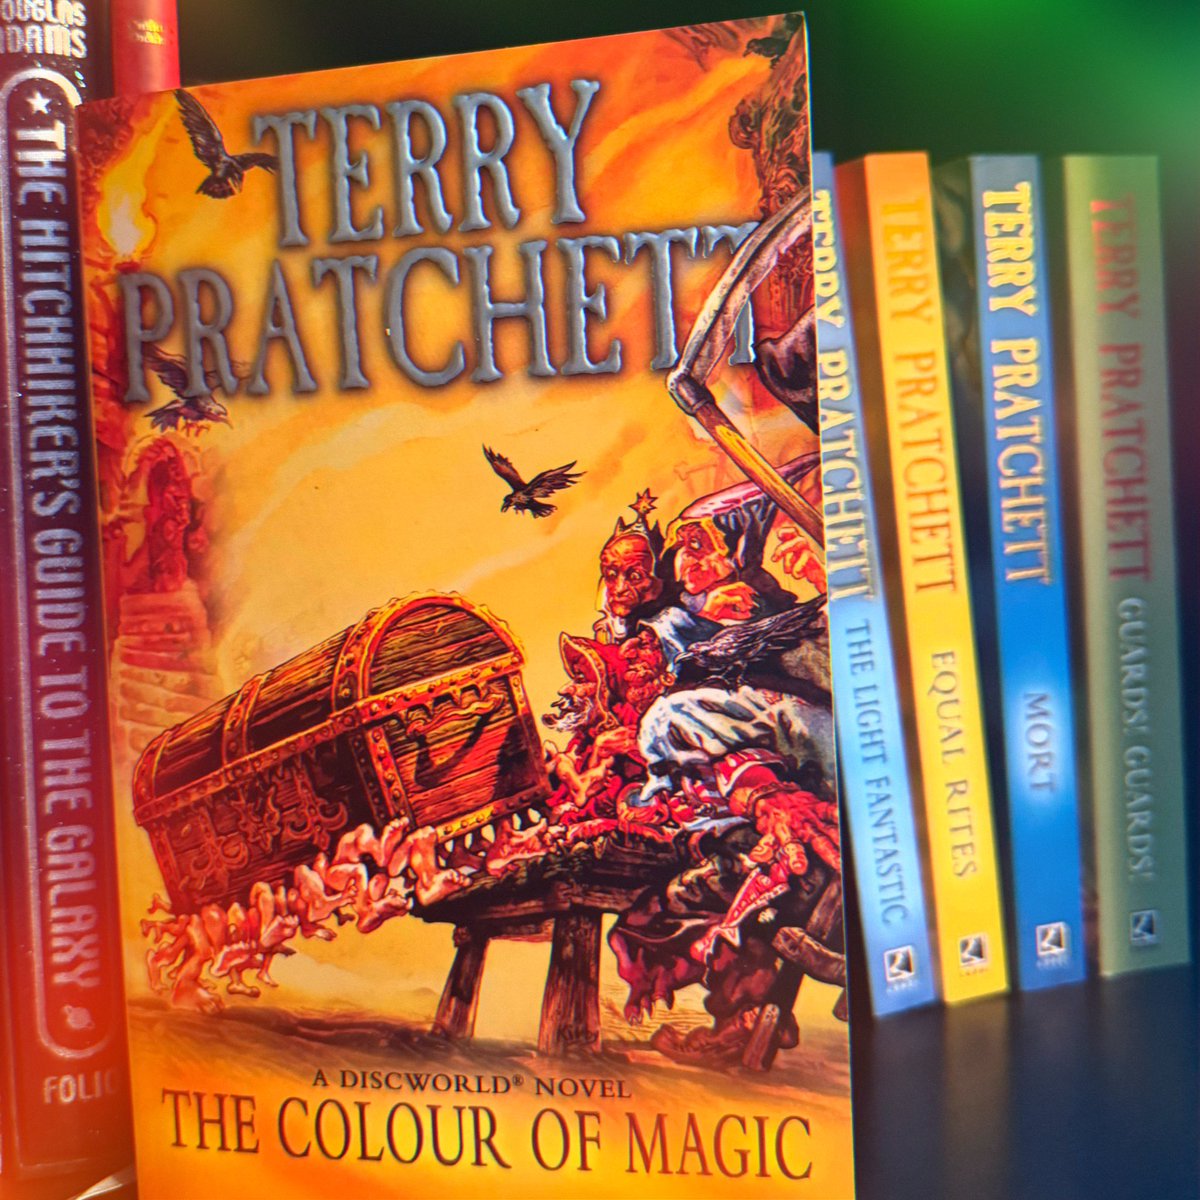 Okay, Pratchett heads. Your time has come🐢

#terrypratchett #Discworld